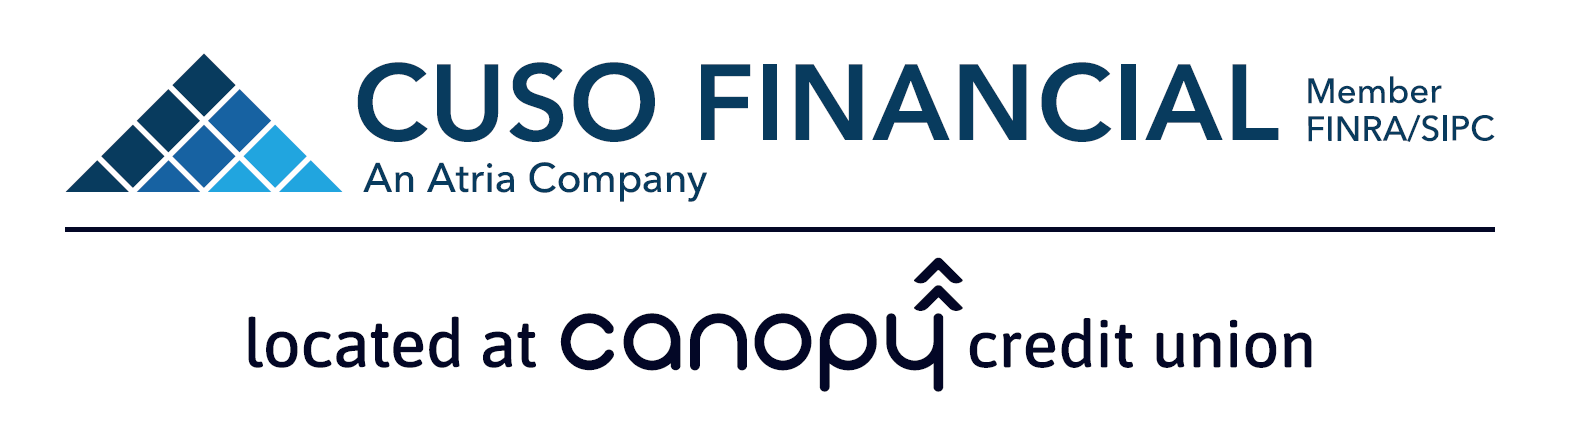 cusco financial logo